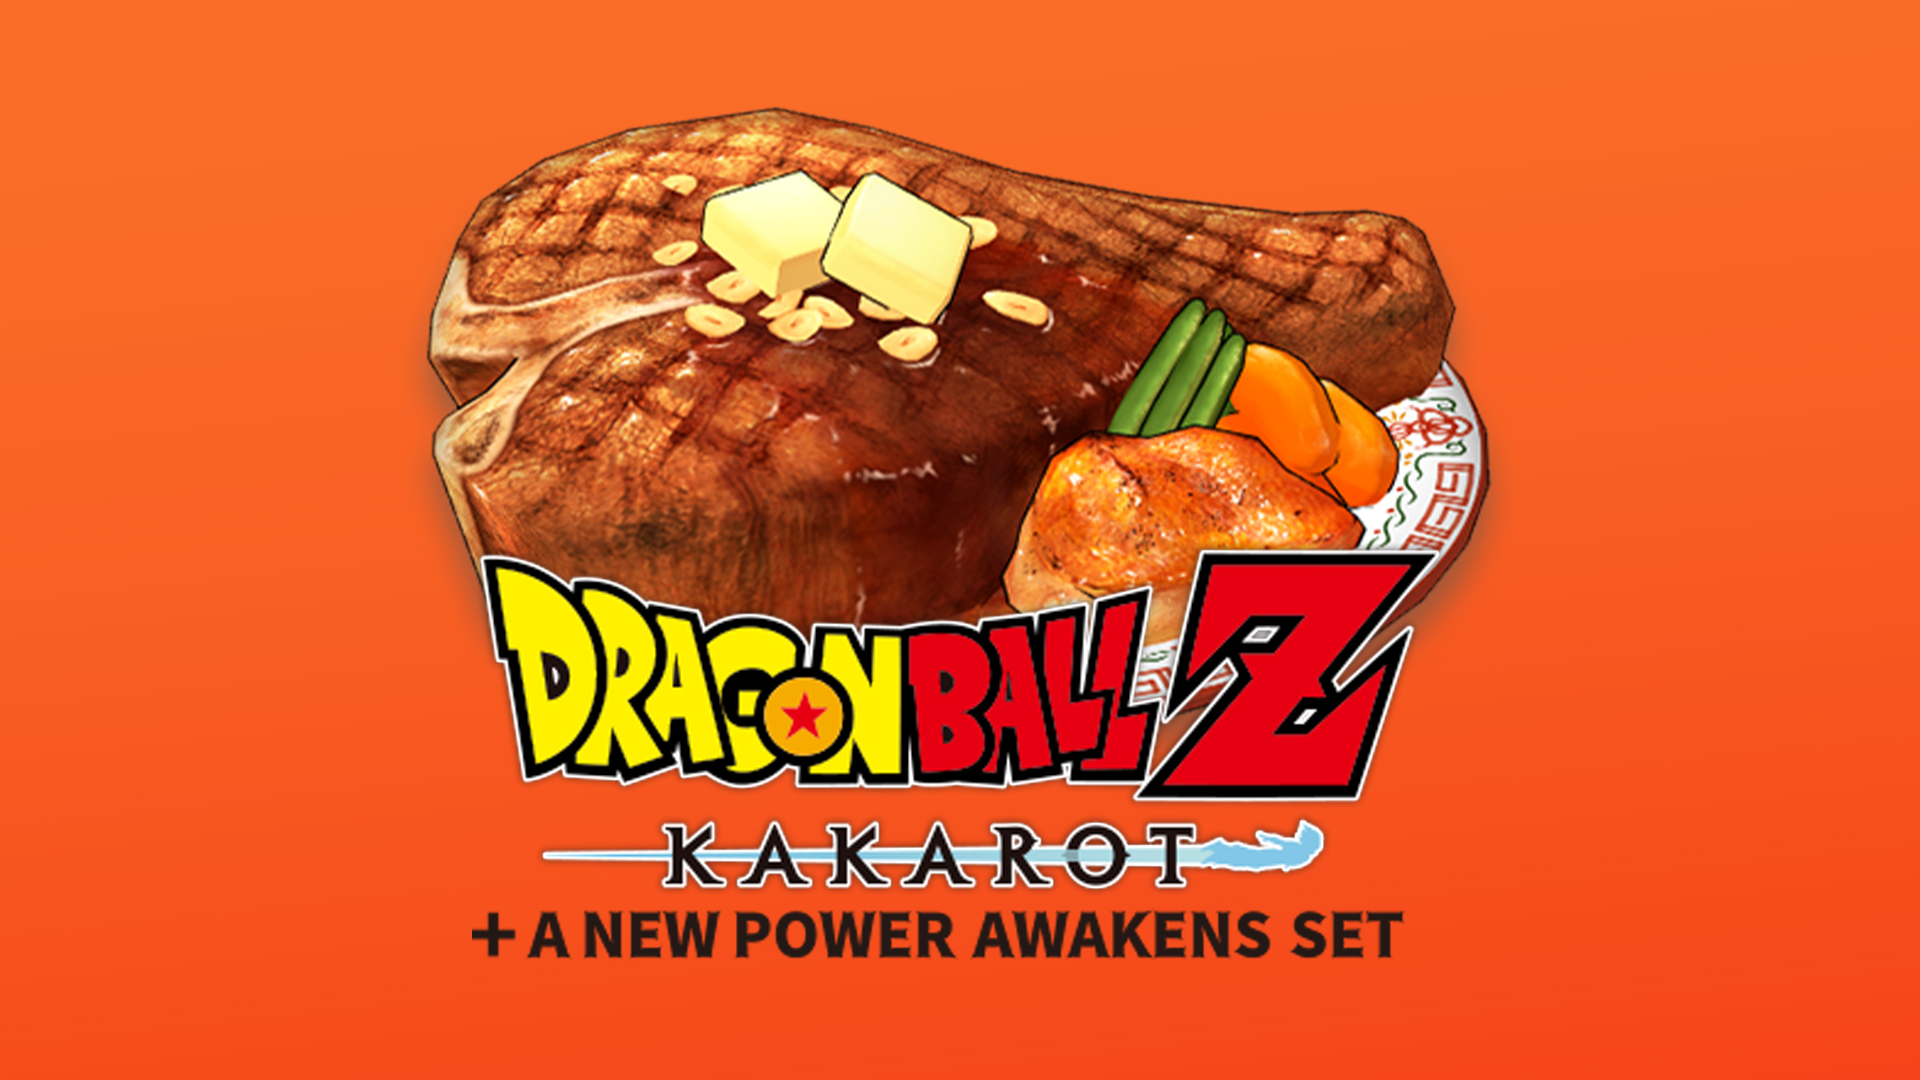 DRAGON BALL Z: KAKAROT + A NEW POWER AWAKENS SET Aged Wild Steak